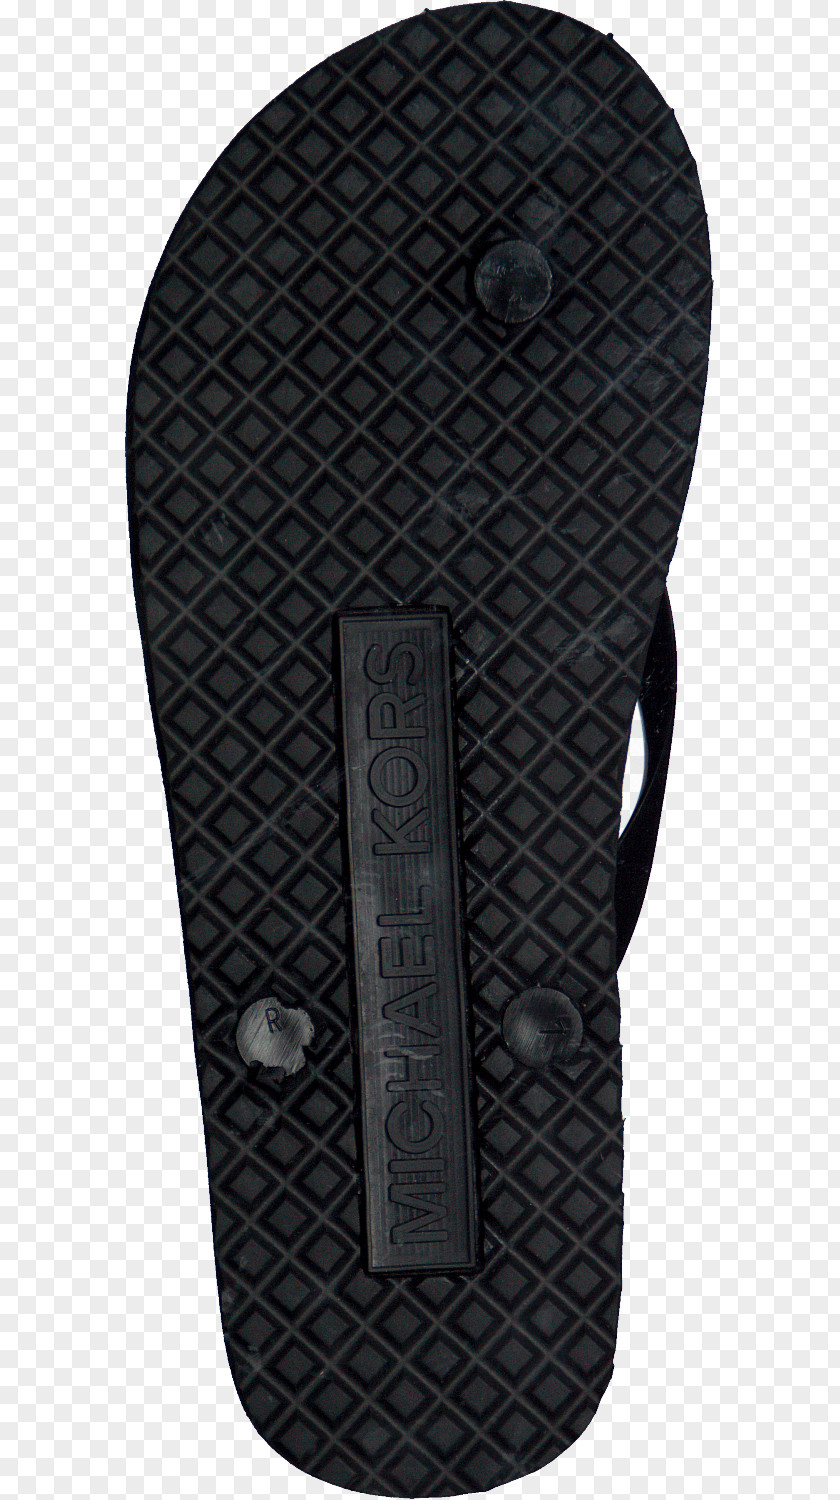 Michael Kors Flip Flops Flip-flops Slipper Product Design Shoe PNG